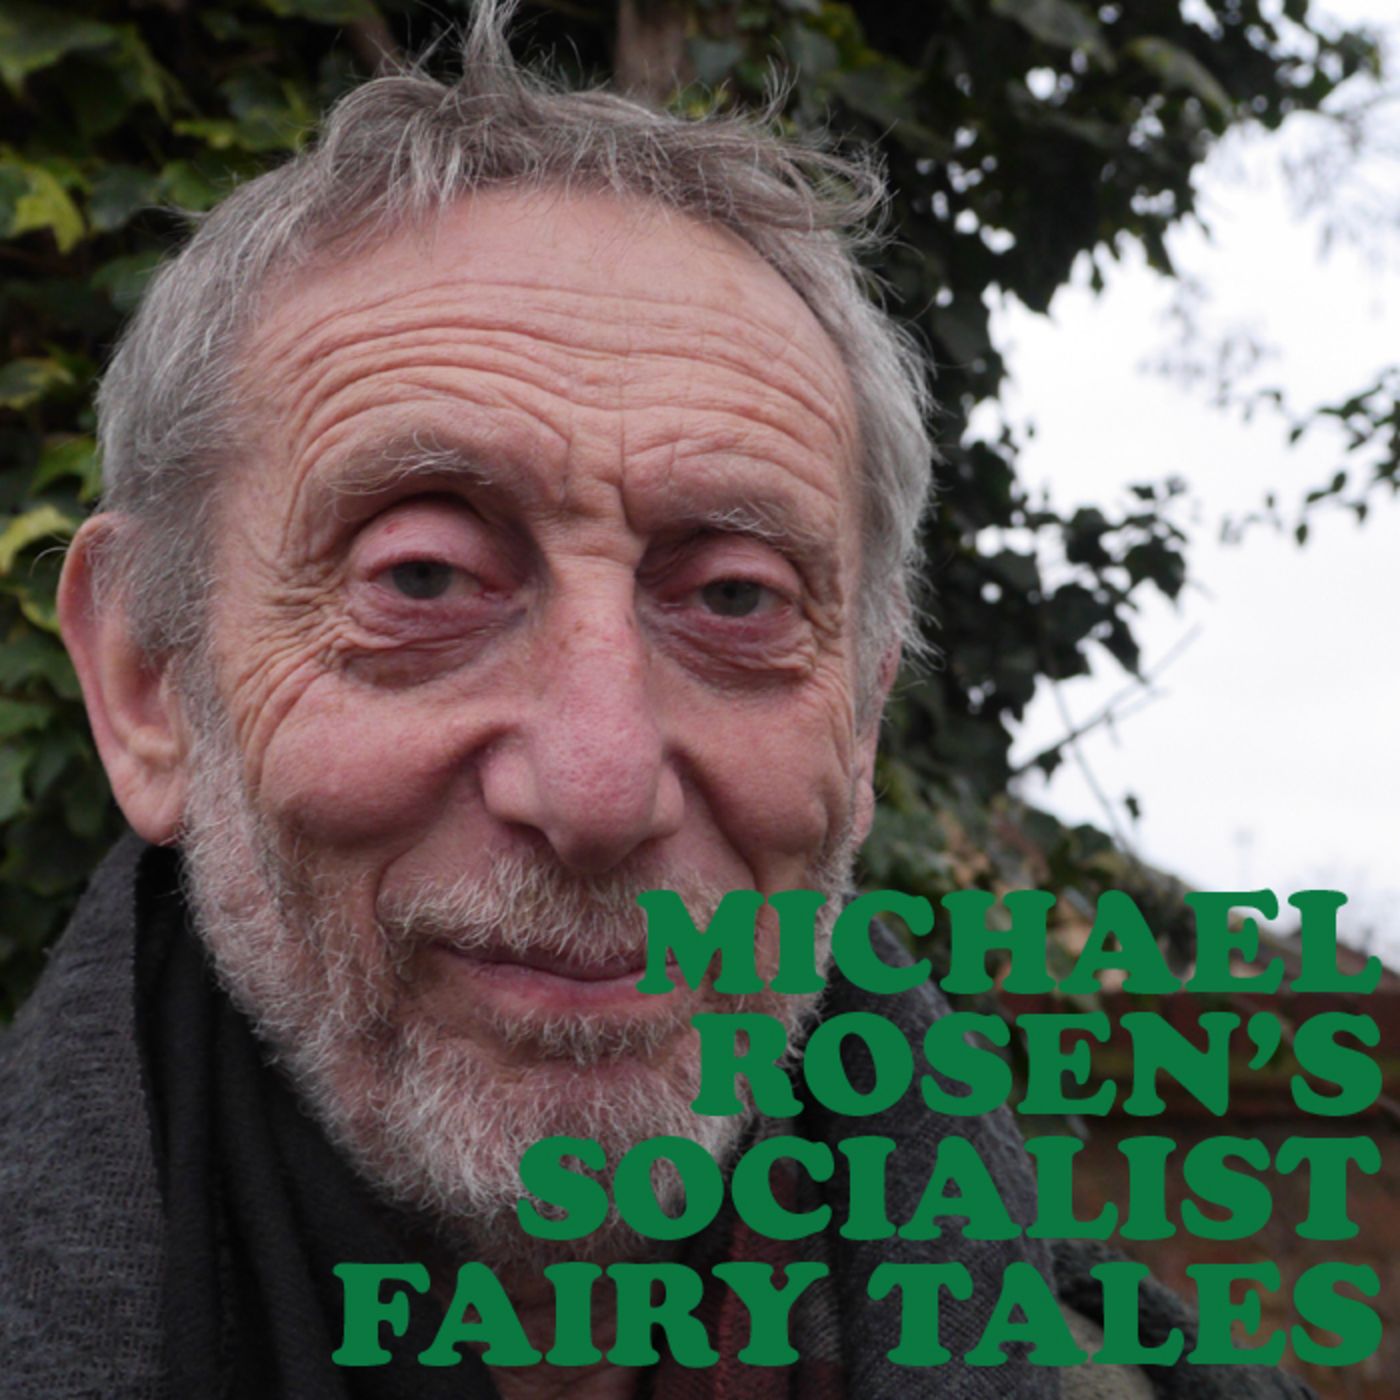 E4 Michael Rosen's socialist fairy tales, part 2